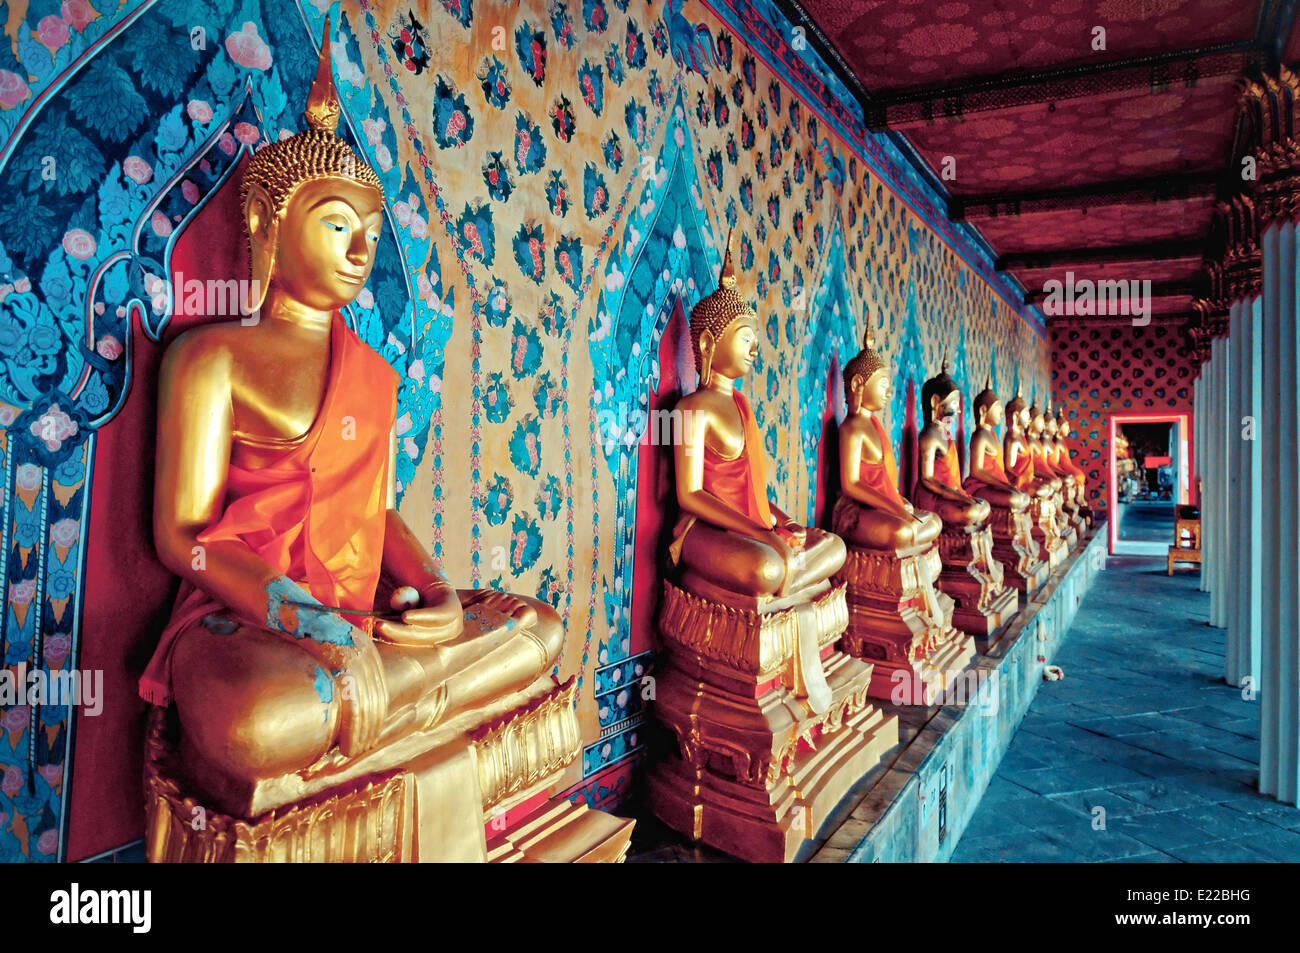 golden statues of Buddha in Wat Arun temple, Bangkok - Thailand Stock Photo